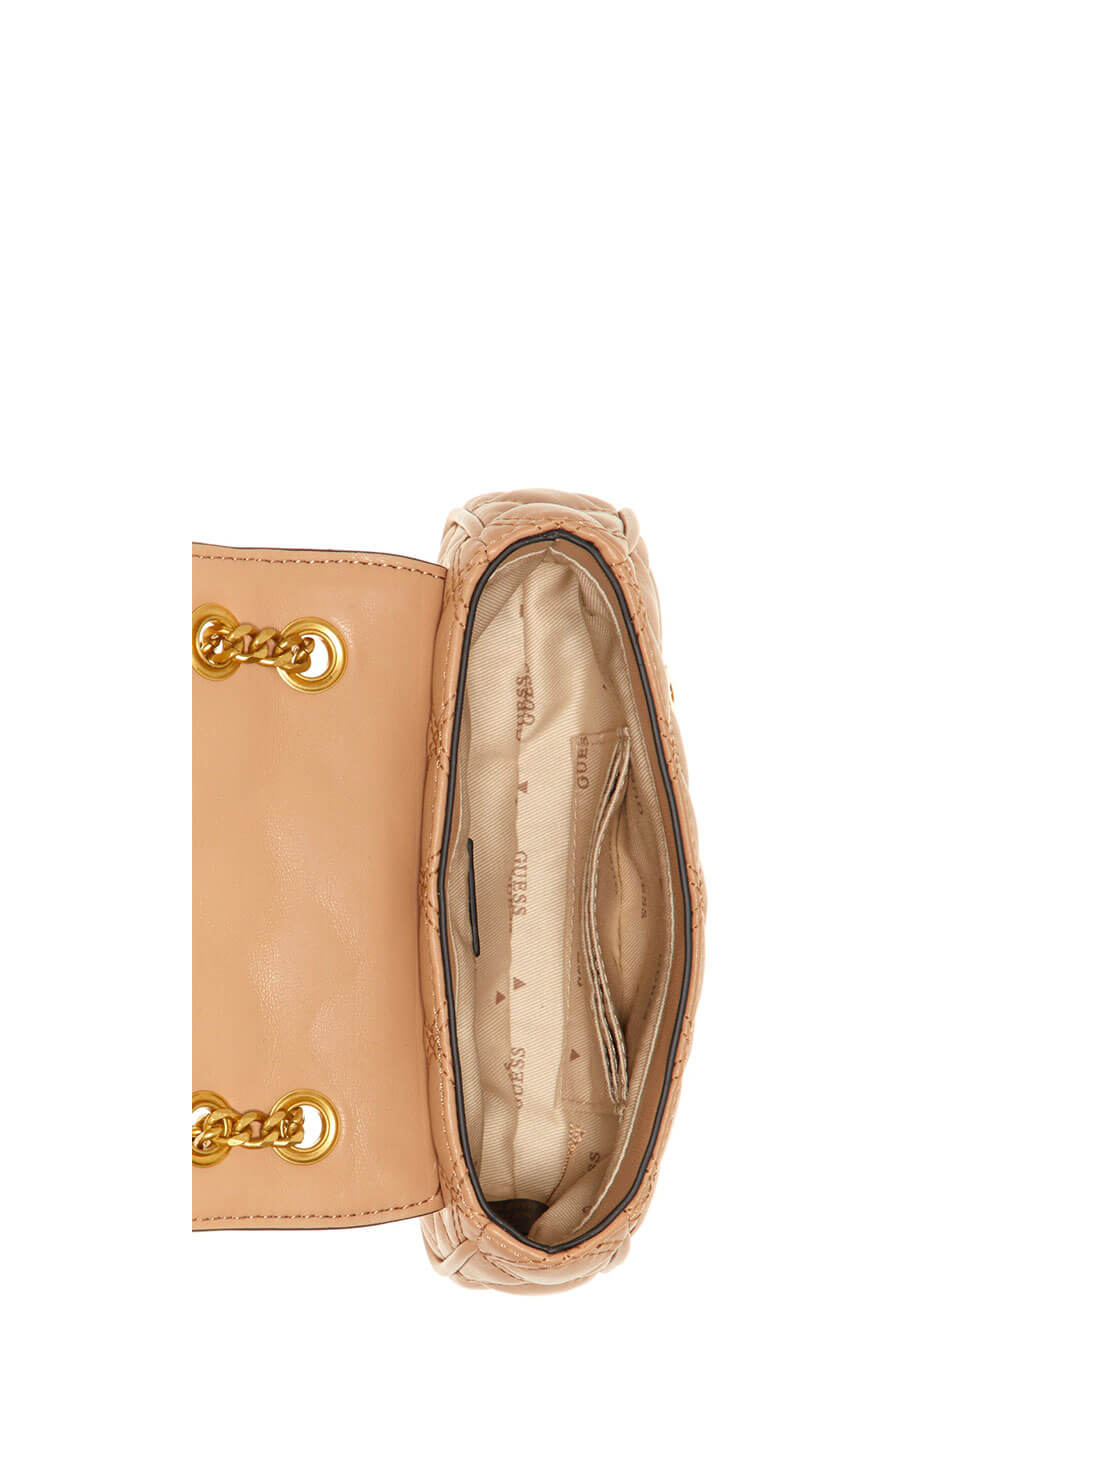 Beige Giully Mini Convertible Crossbody Bag | GUESS Women's Handbags | inside view